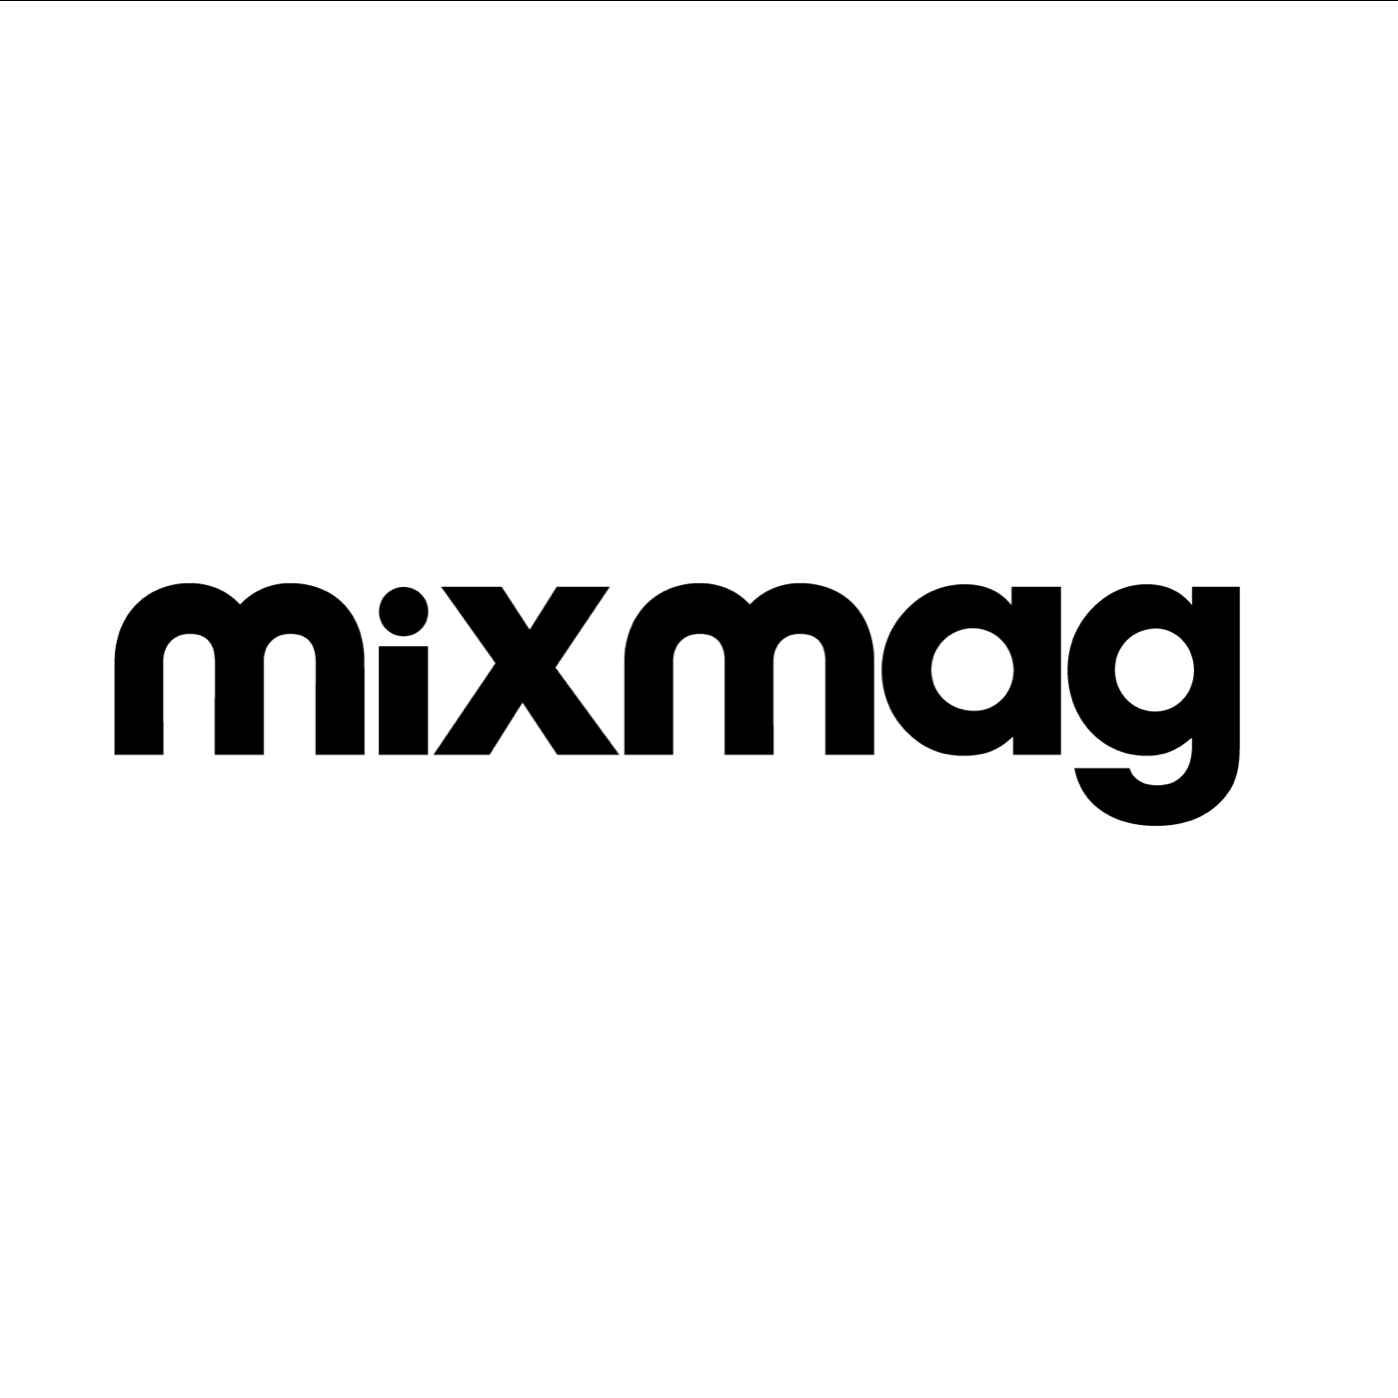 Mixmag Logo